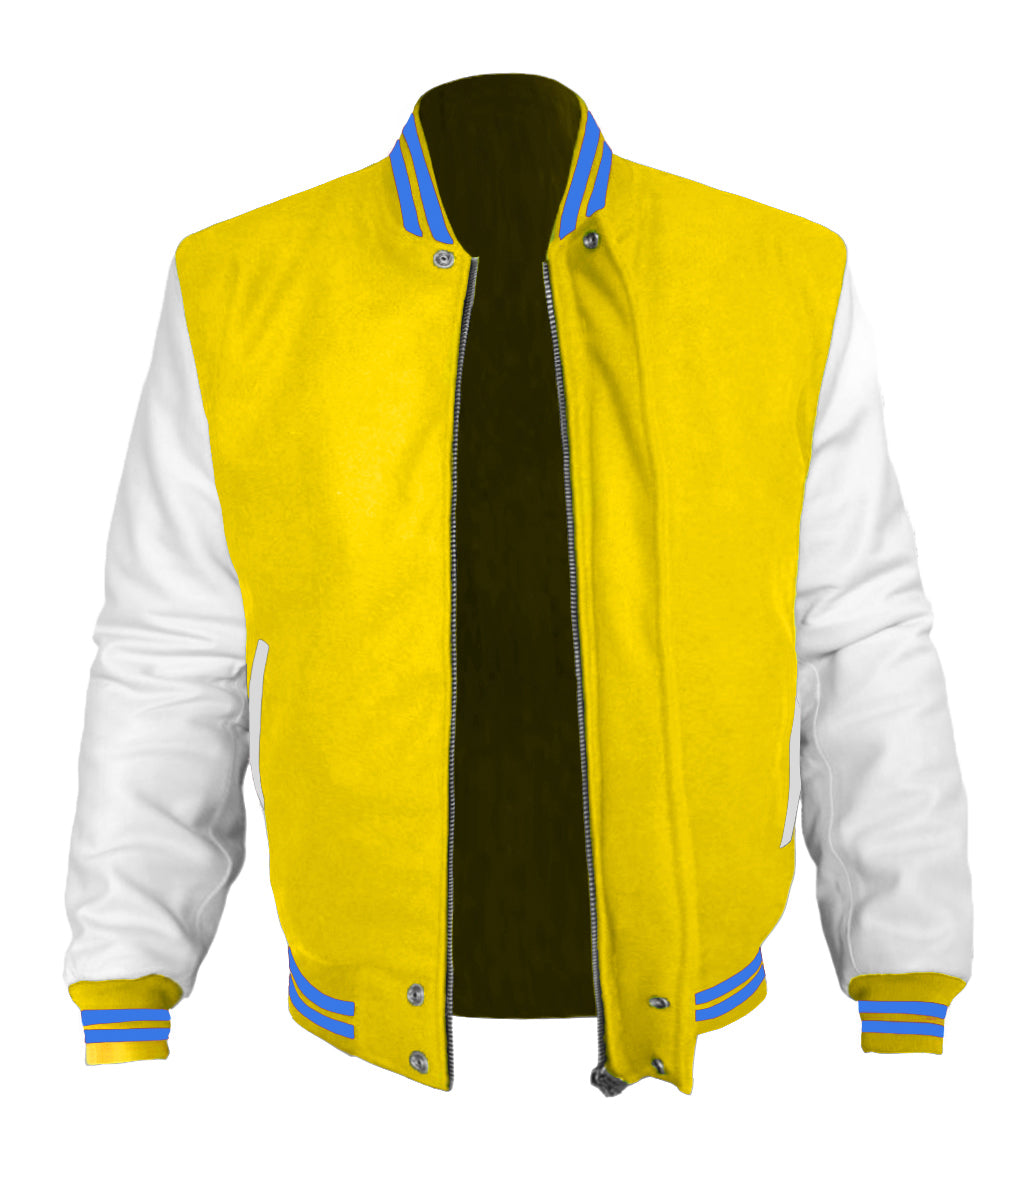 Men's College Yellow and Black Varsity Jacket